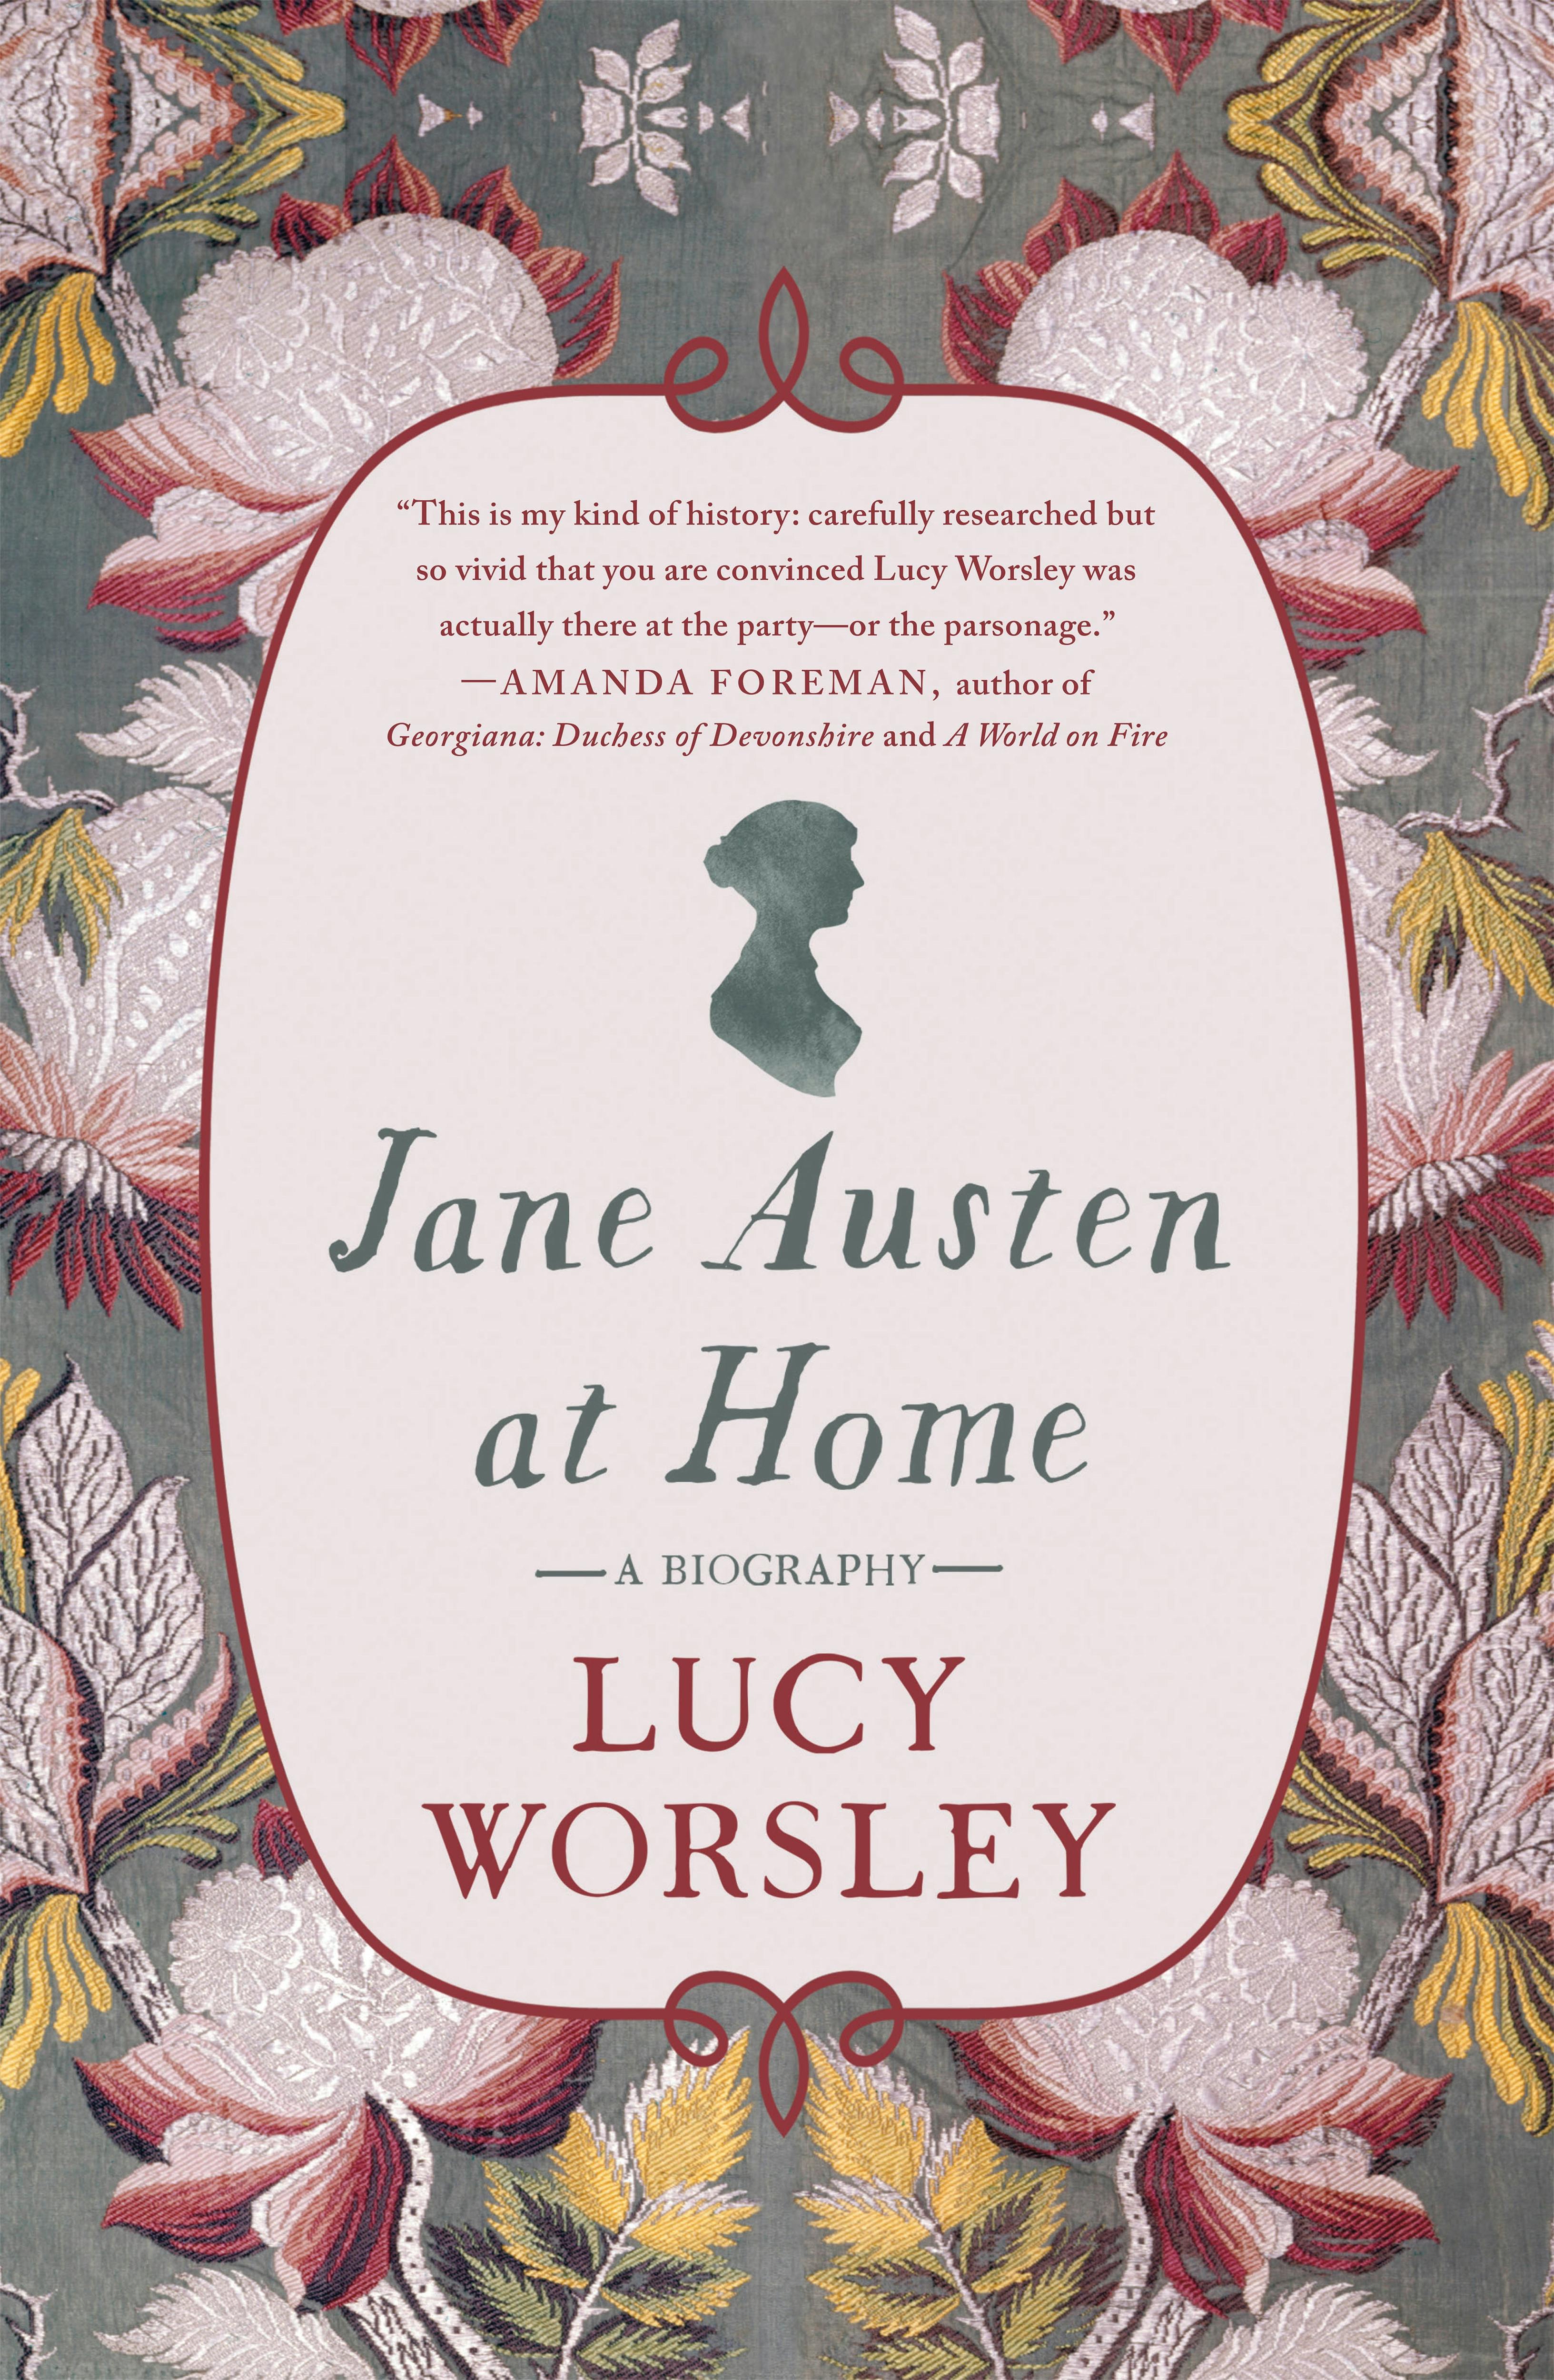 Jane Austen at Home pic